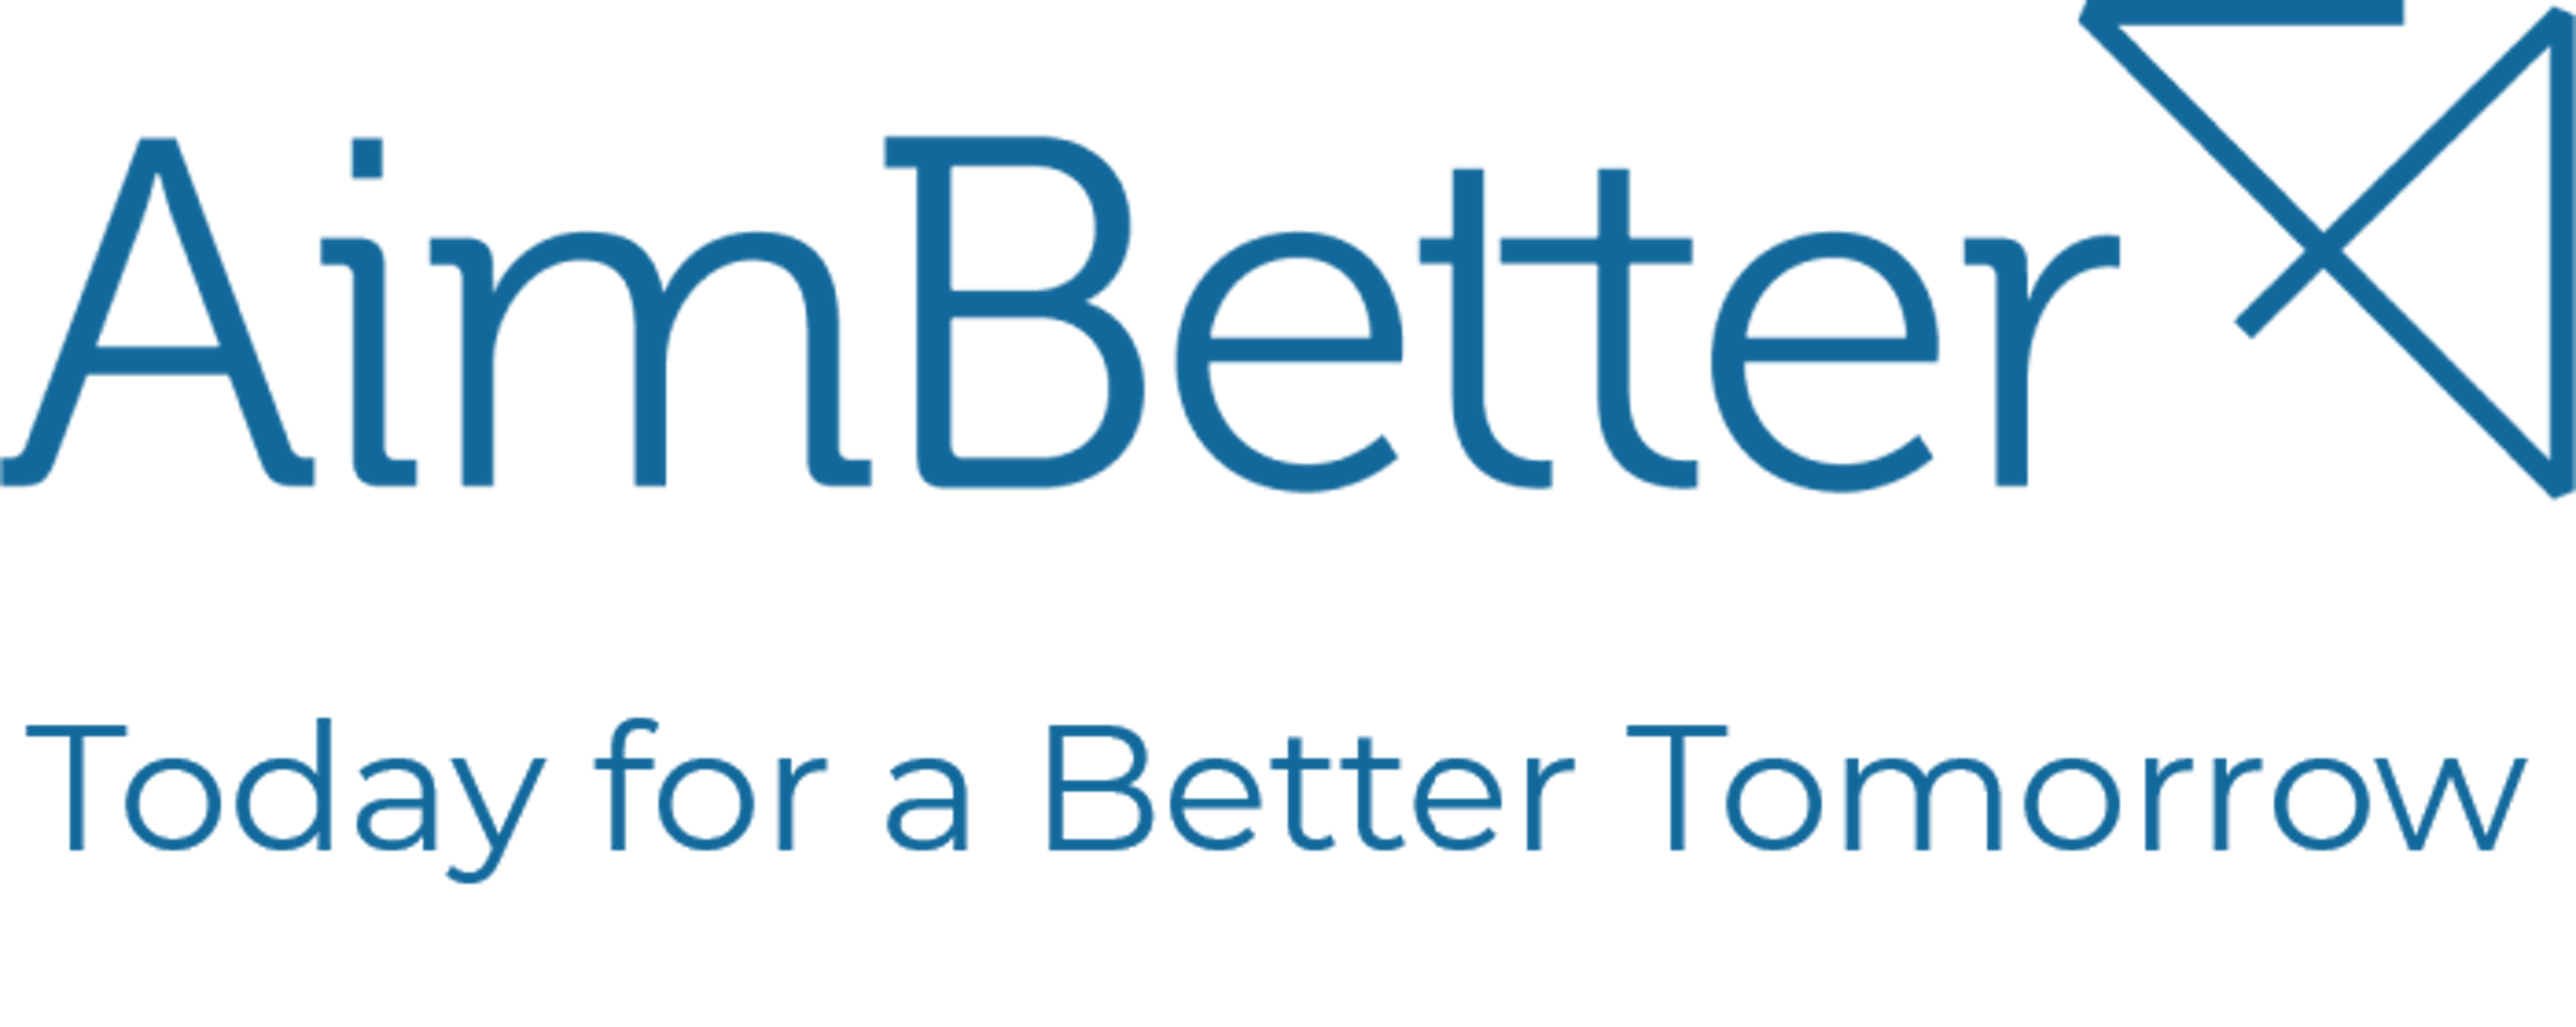 AimBetter Logo